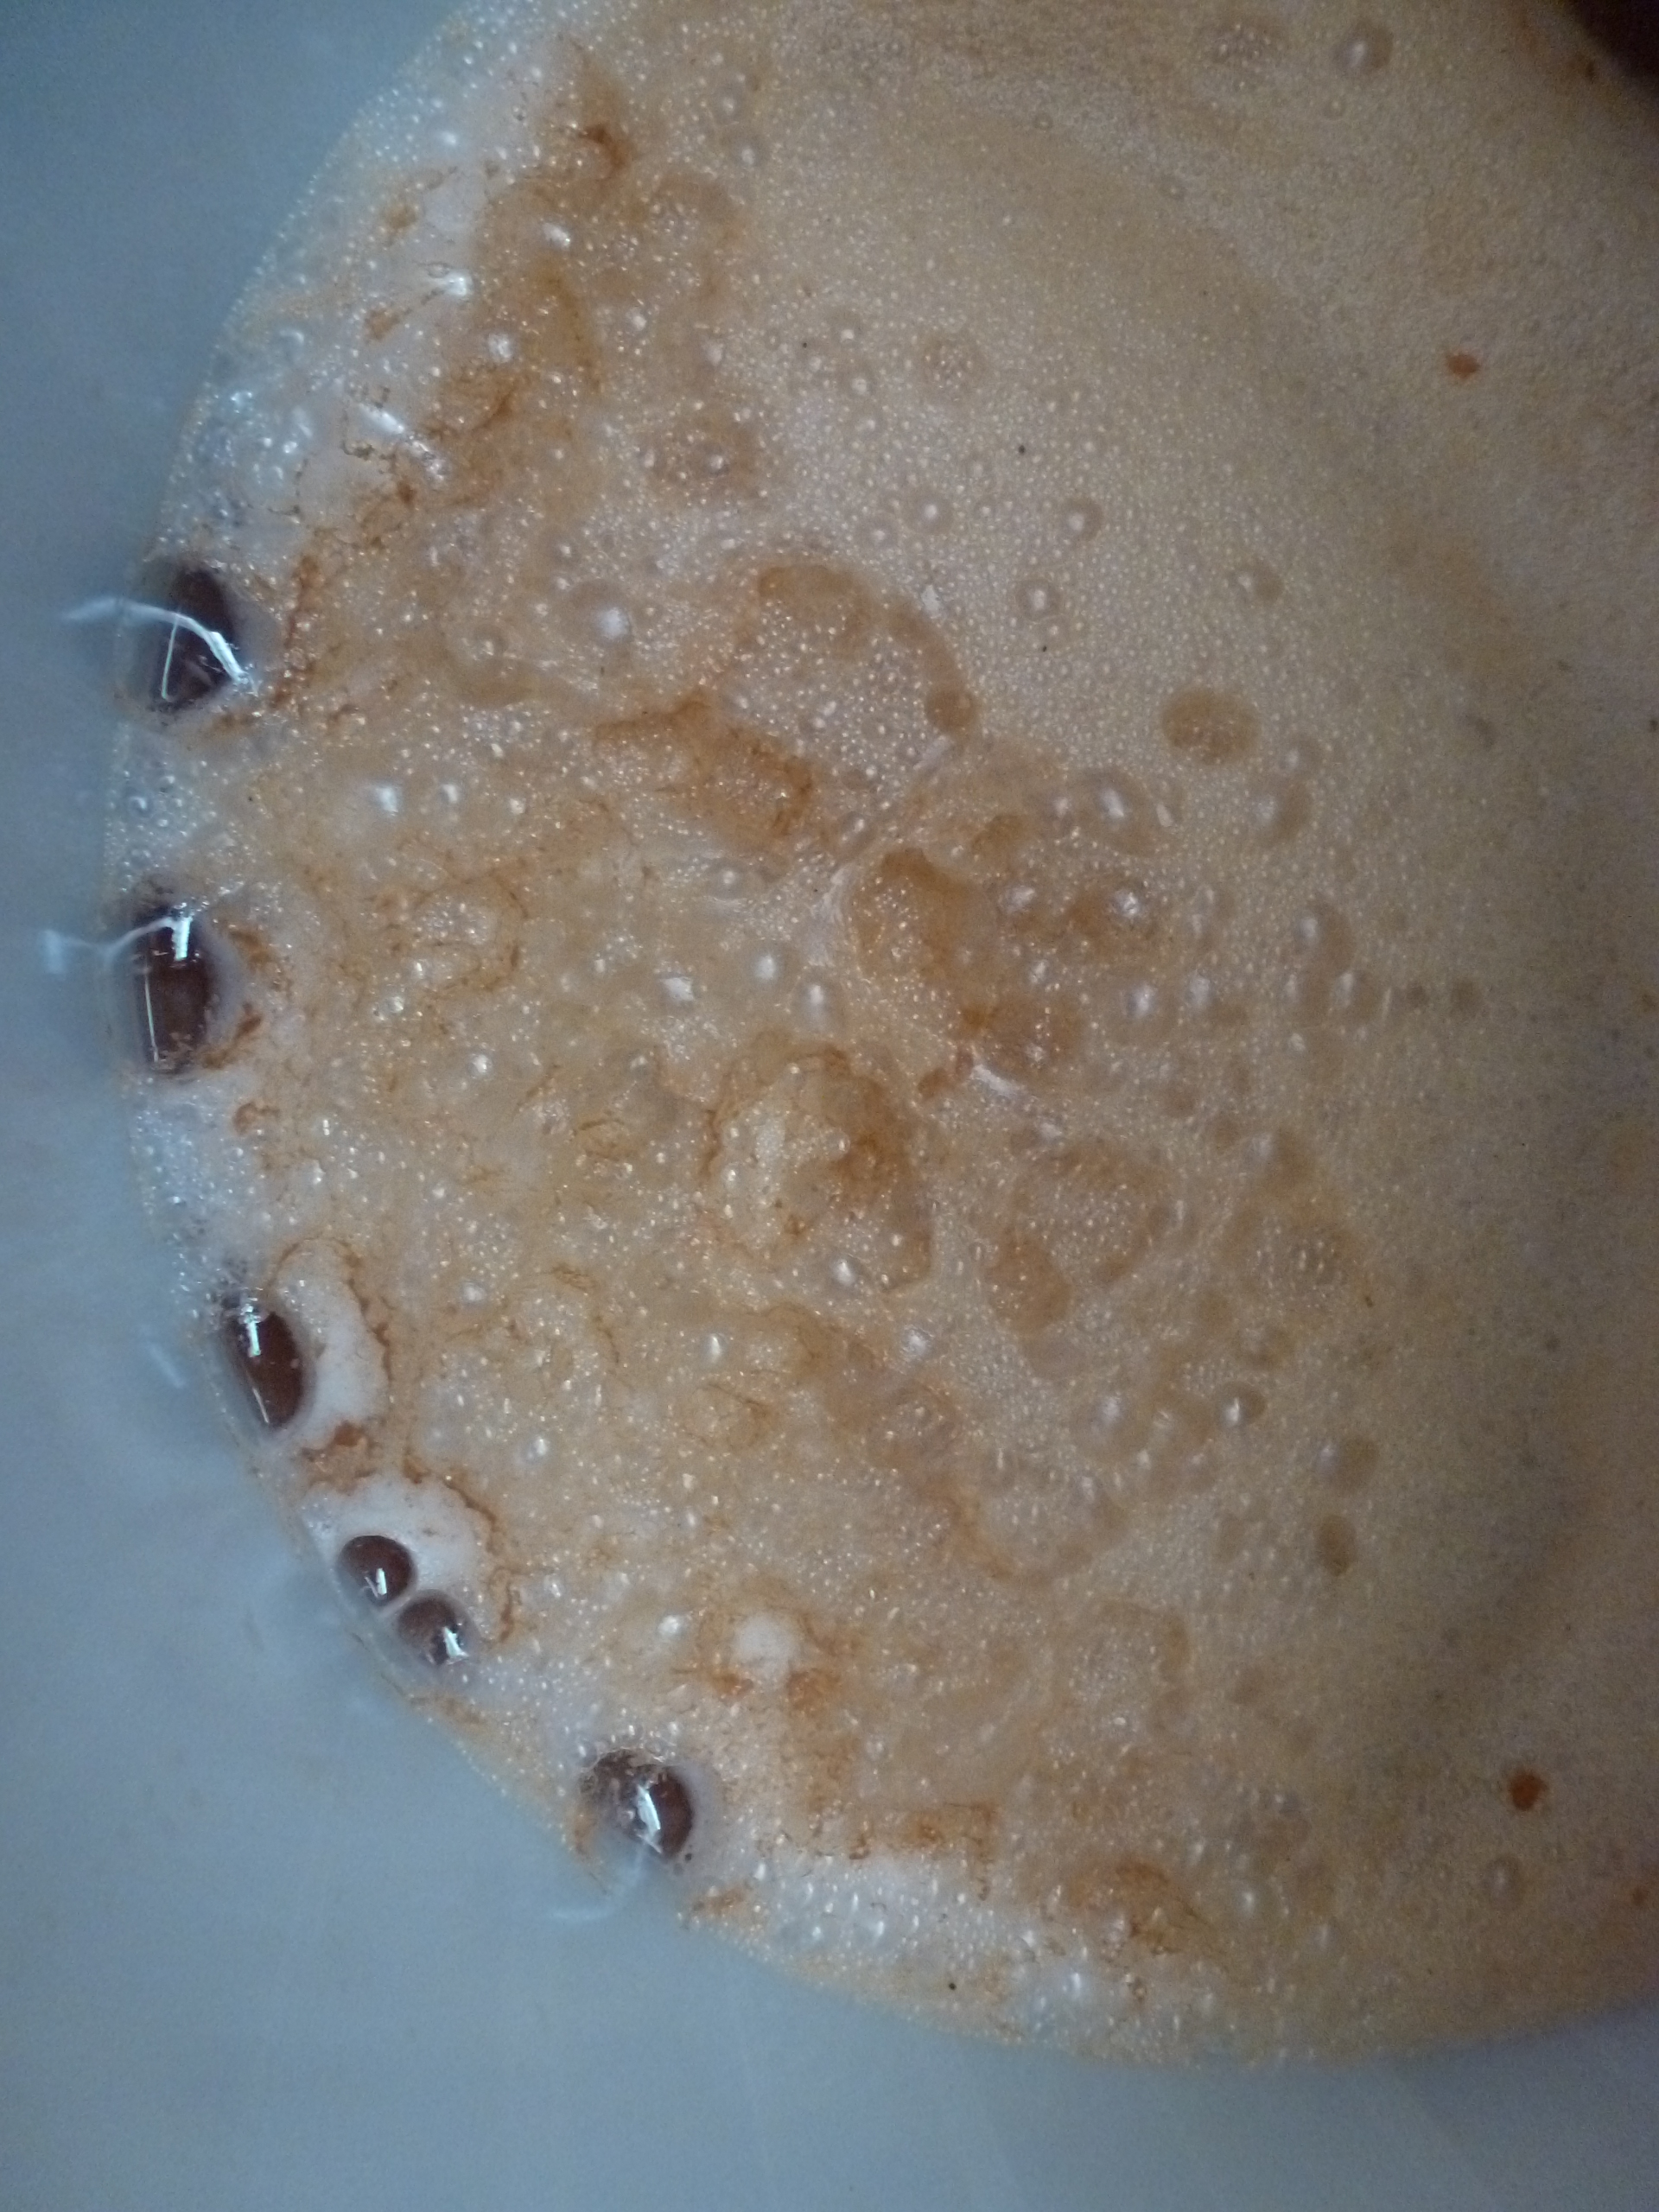 Rocky head formed during fermentation